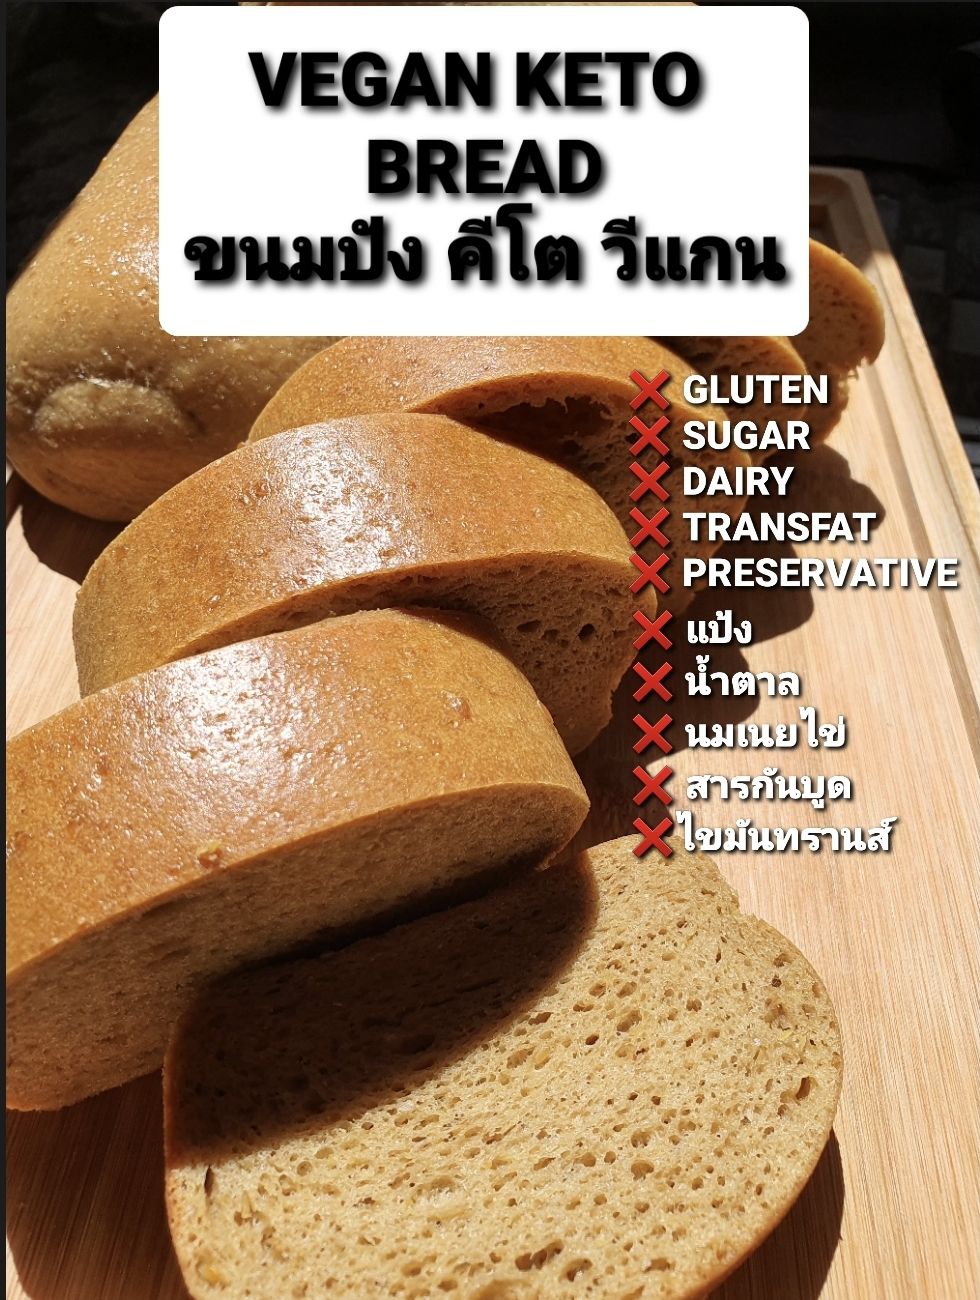 VEGAN KETO BREAD ขนมปัง คีโต ทำจากพืช ไม่มีนมเนยไข่